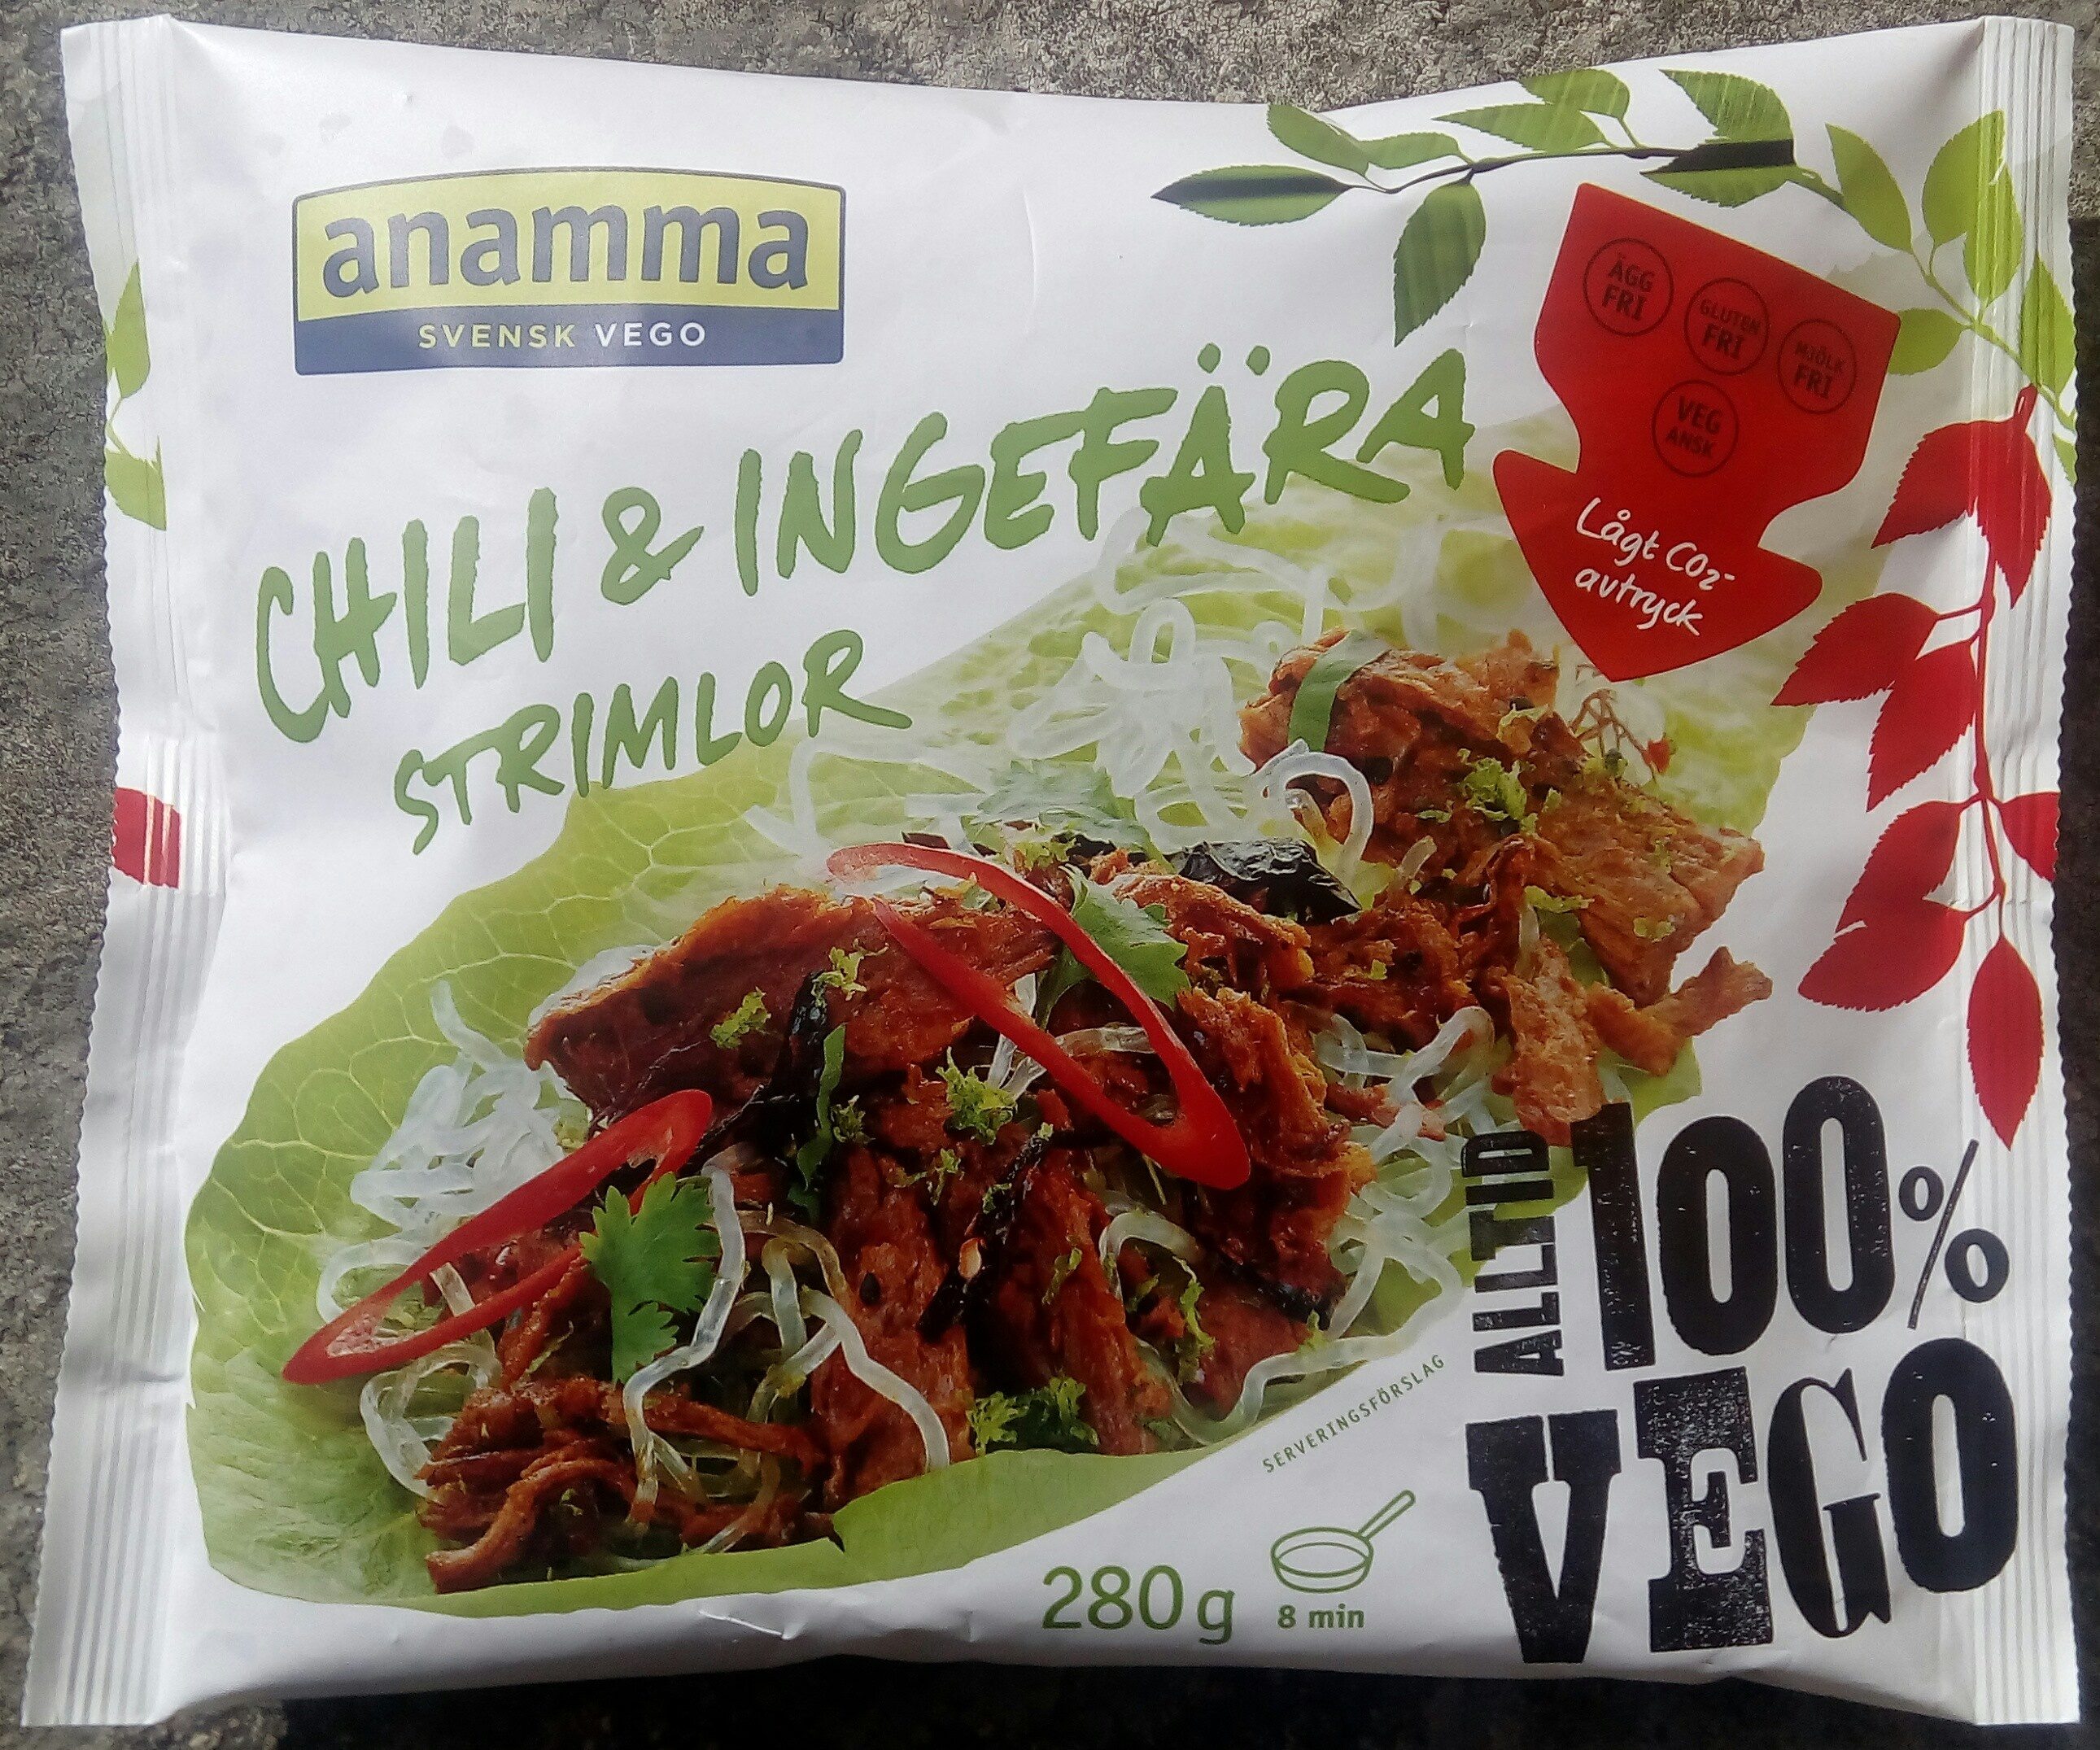 Anamma Chili- & Ingefärastrimlor - Produkt - sv